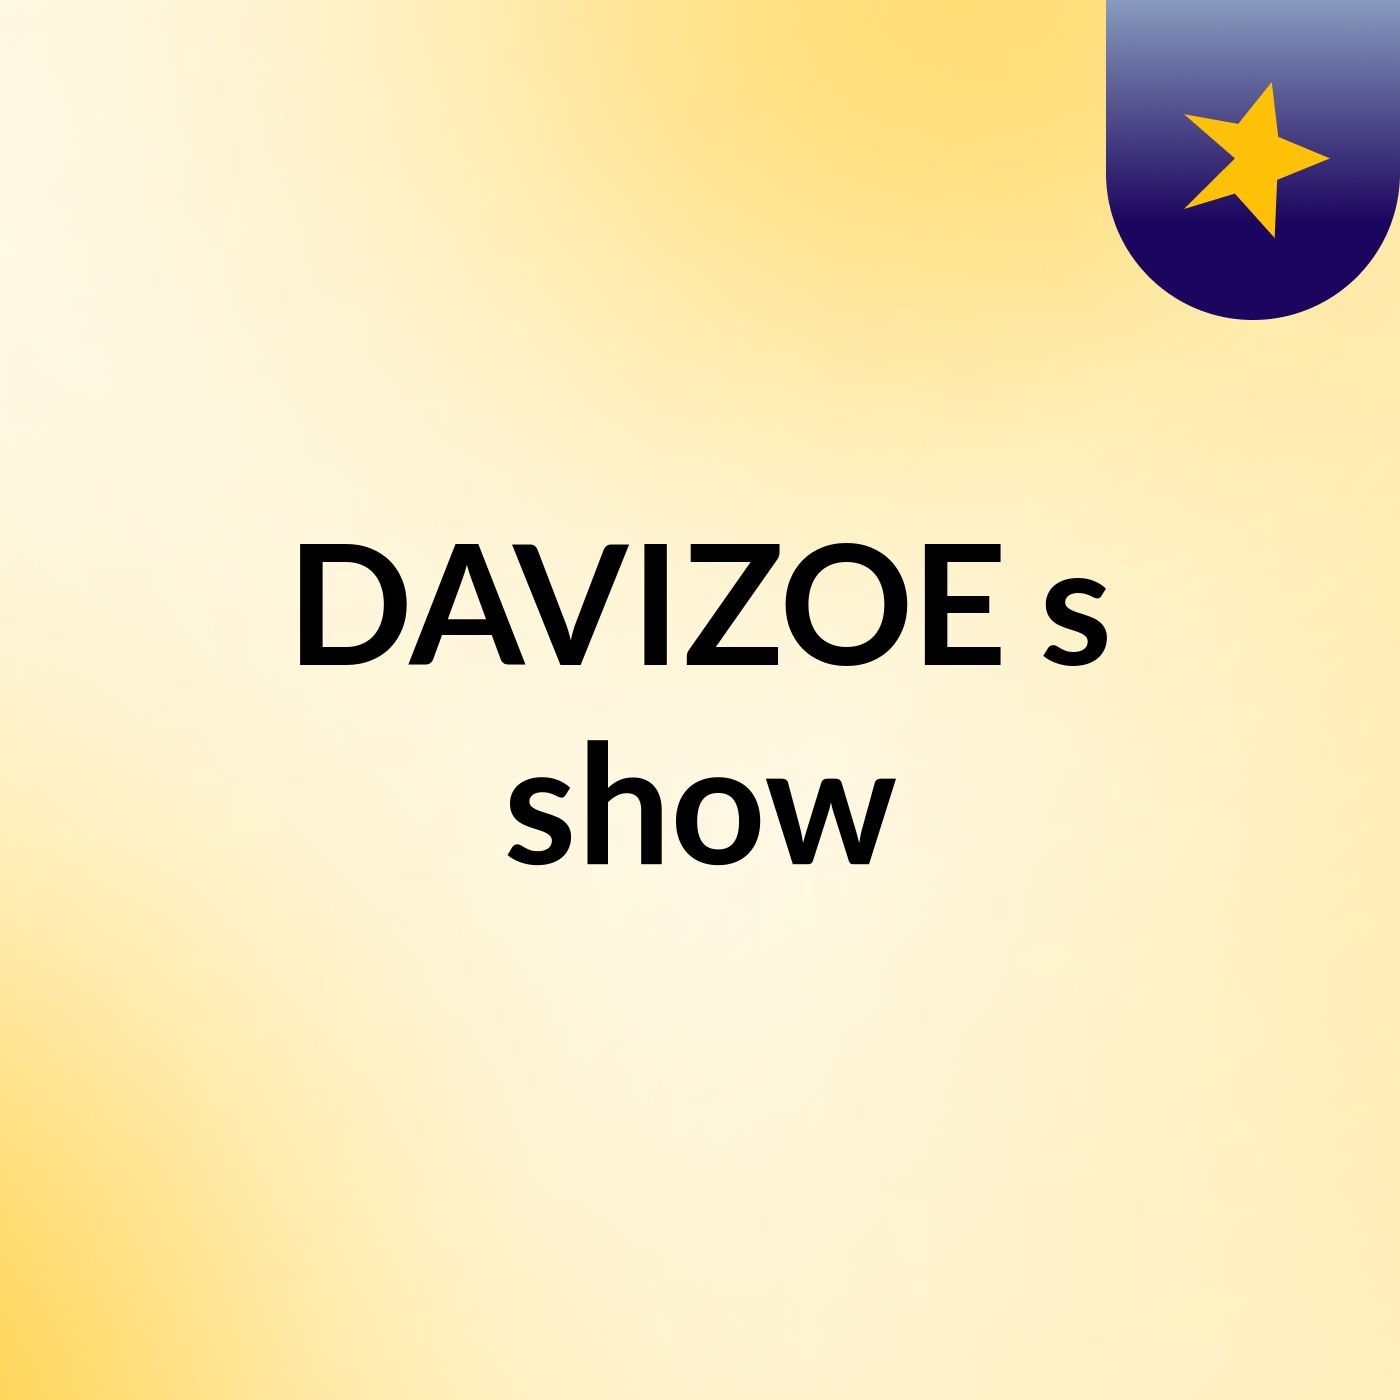 DAVIZOE's show